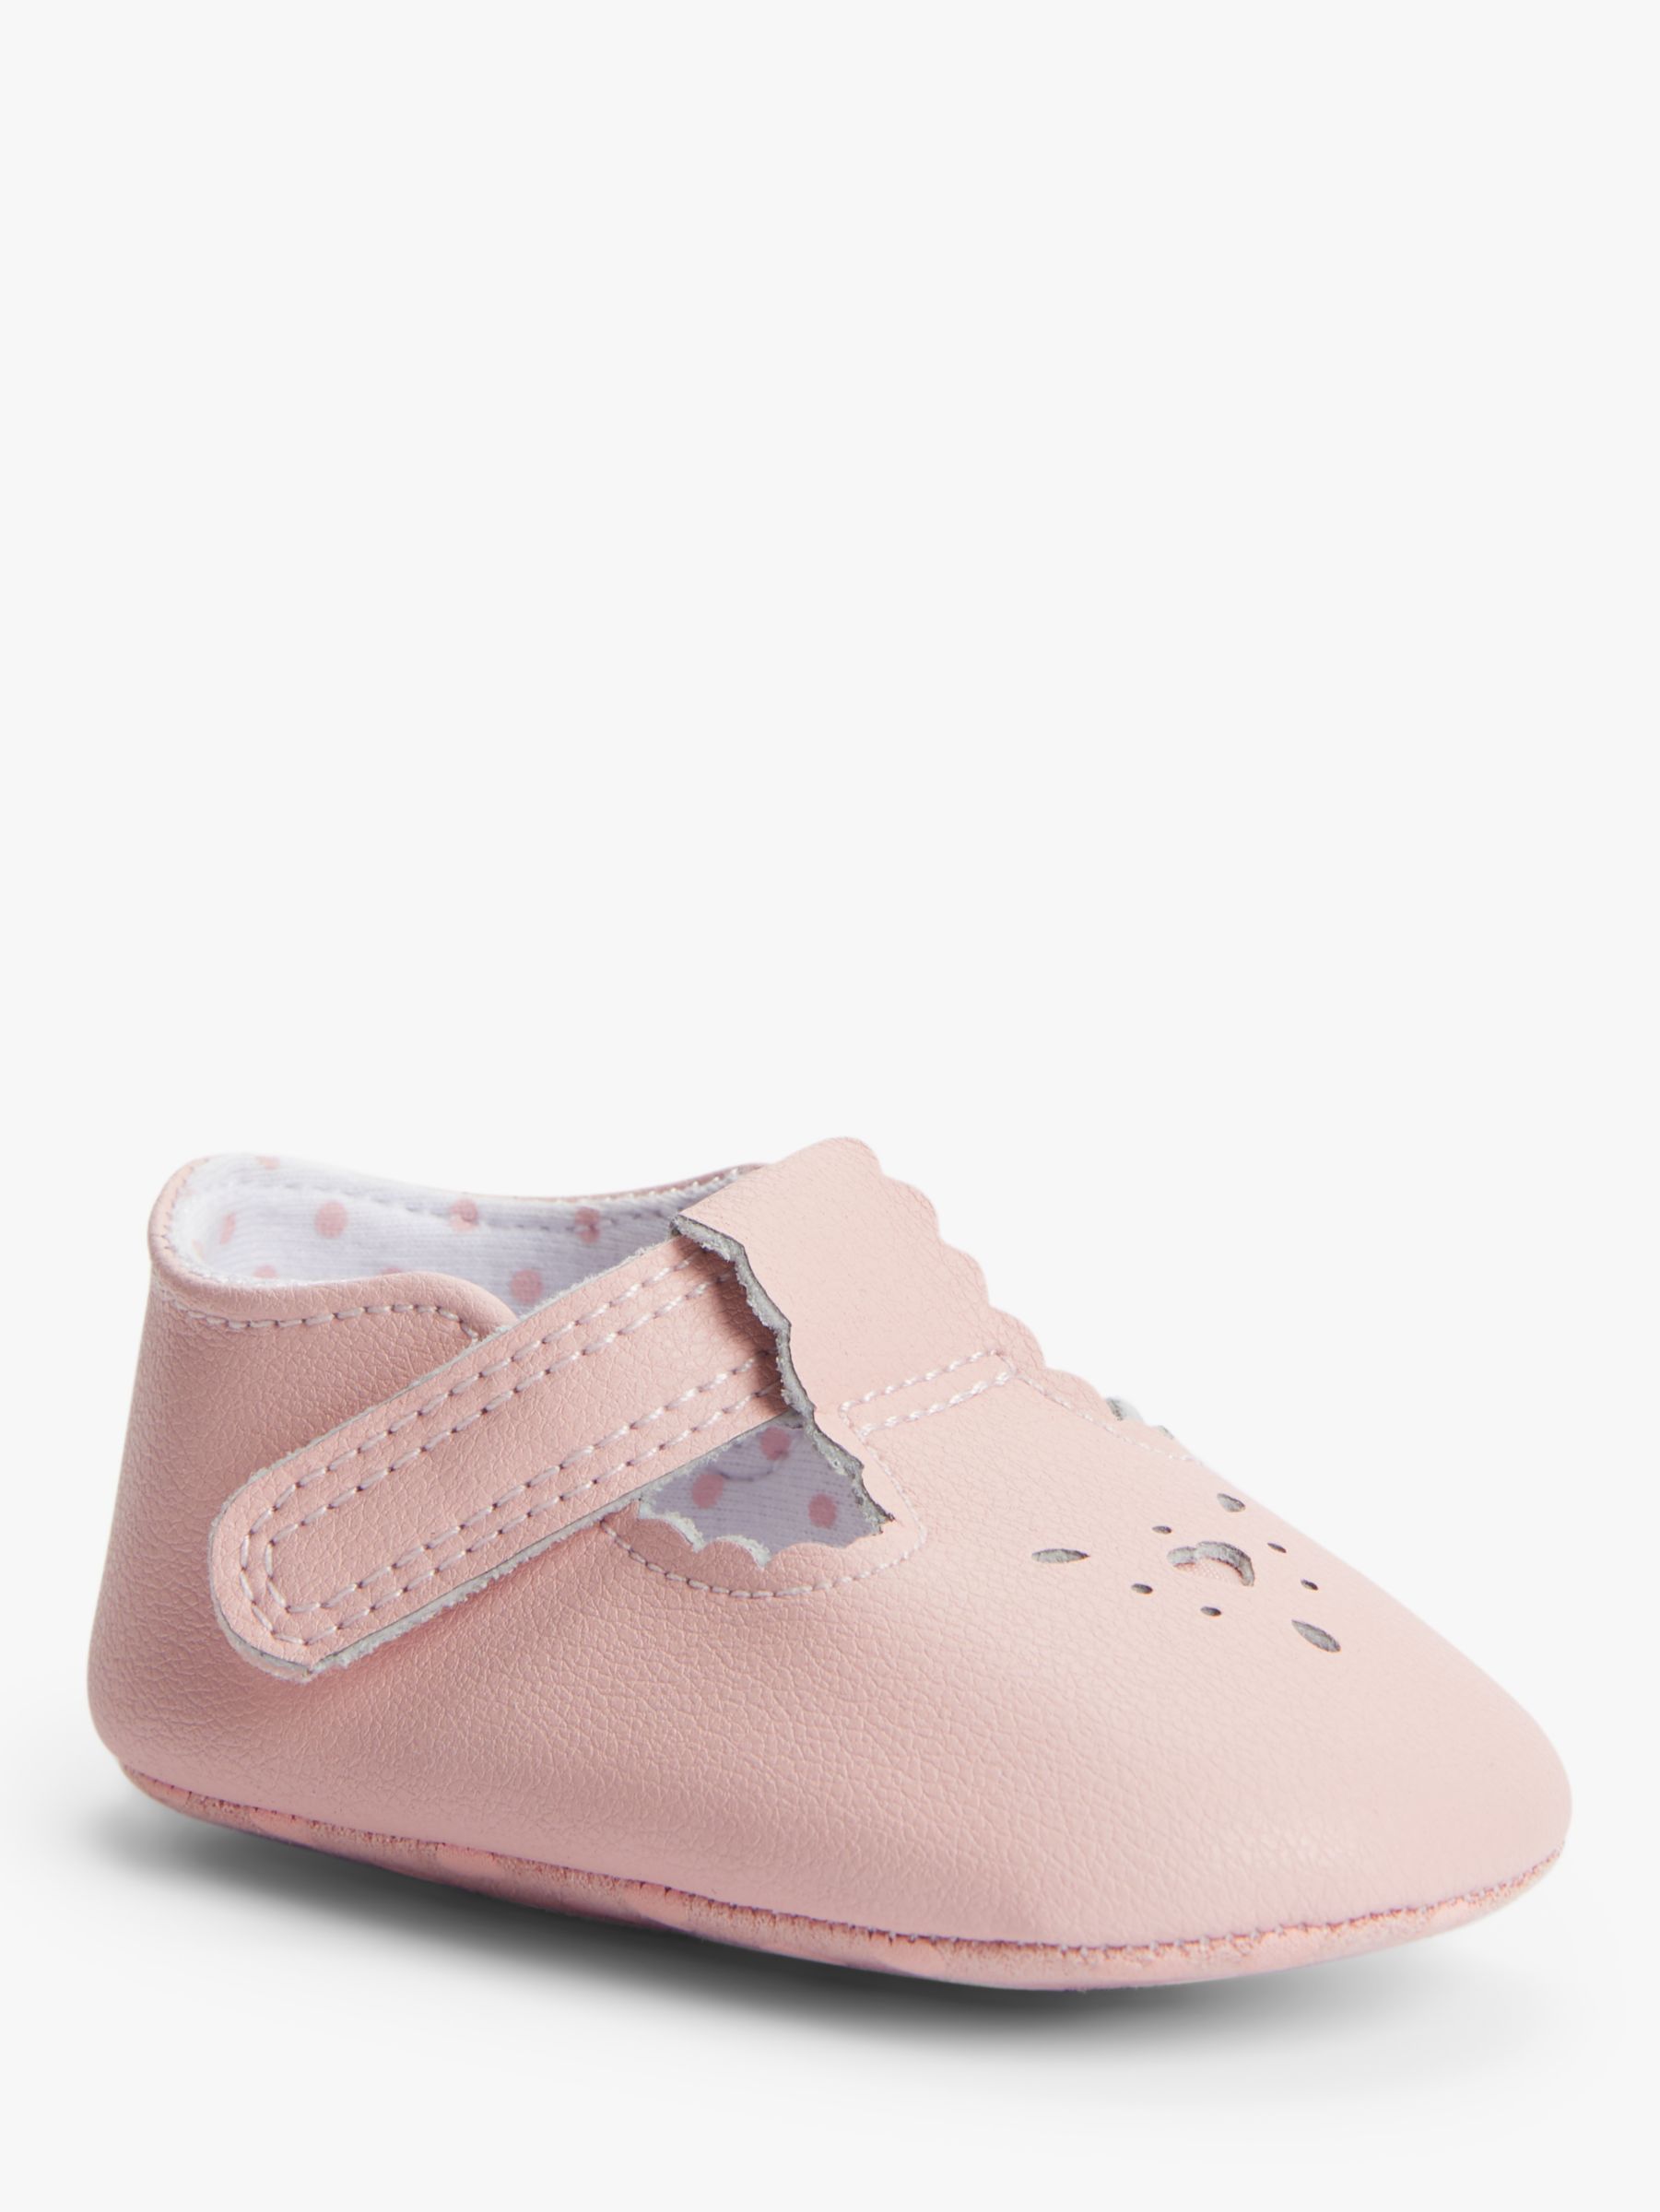 Baby Shoes | Toddler Shoes | John Lewis 